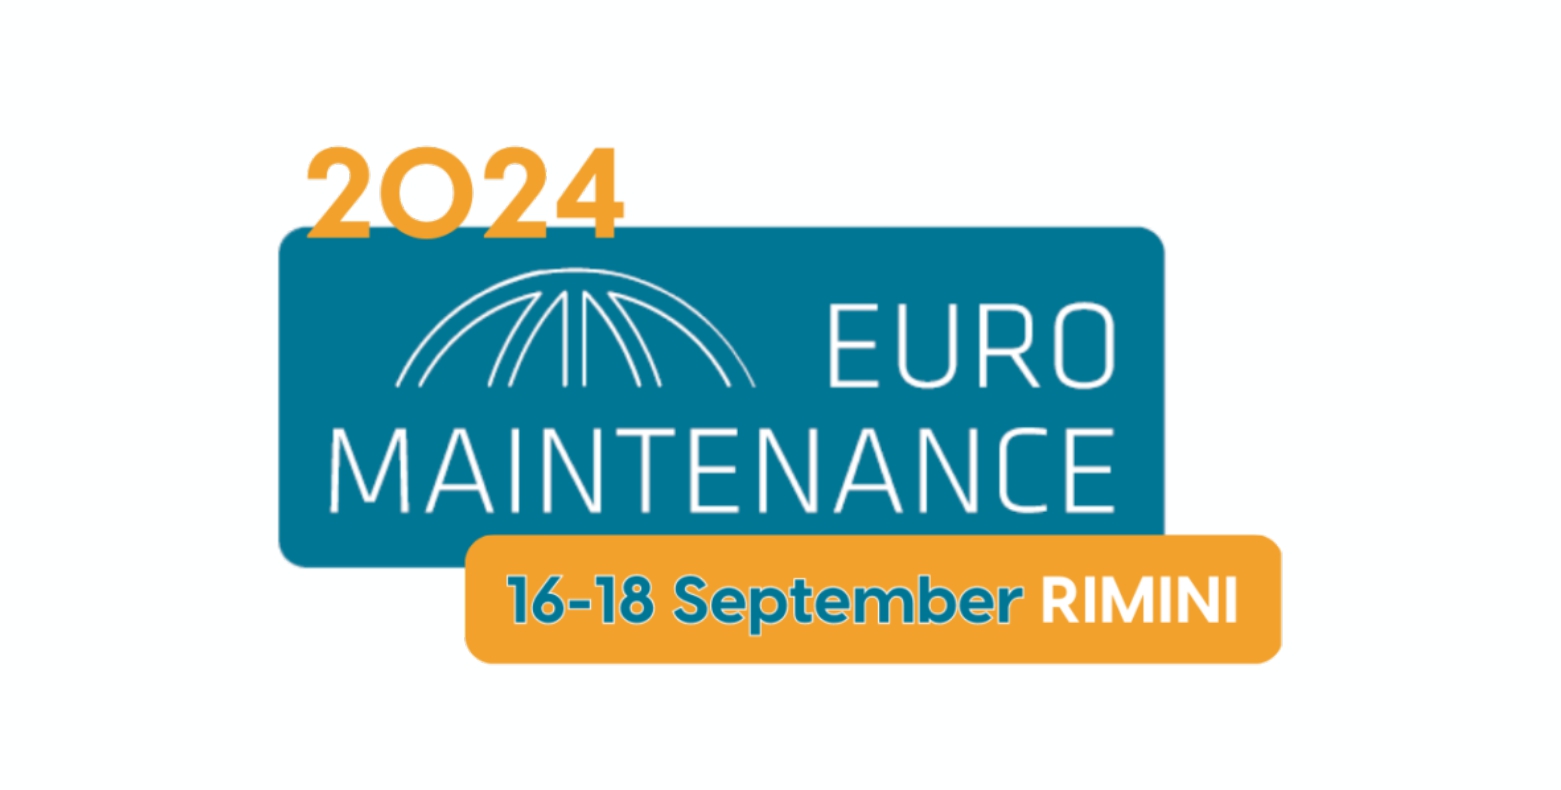 Euro Maintenance 2024 logo